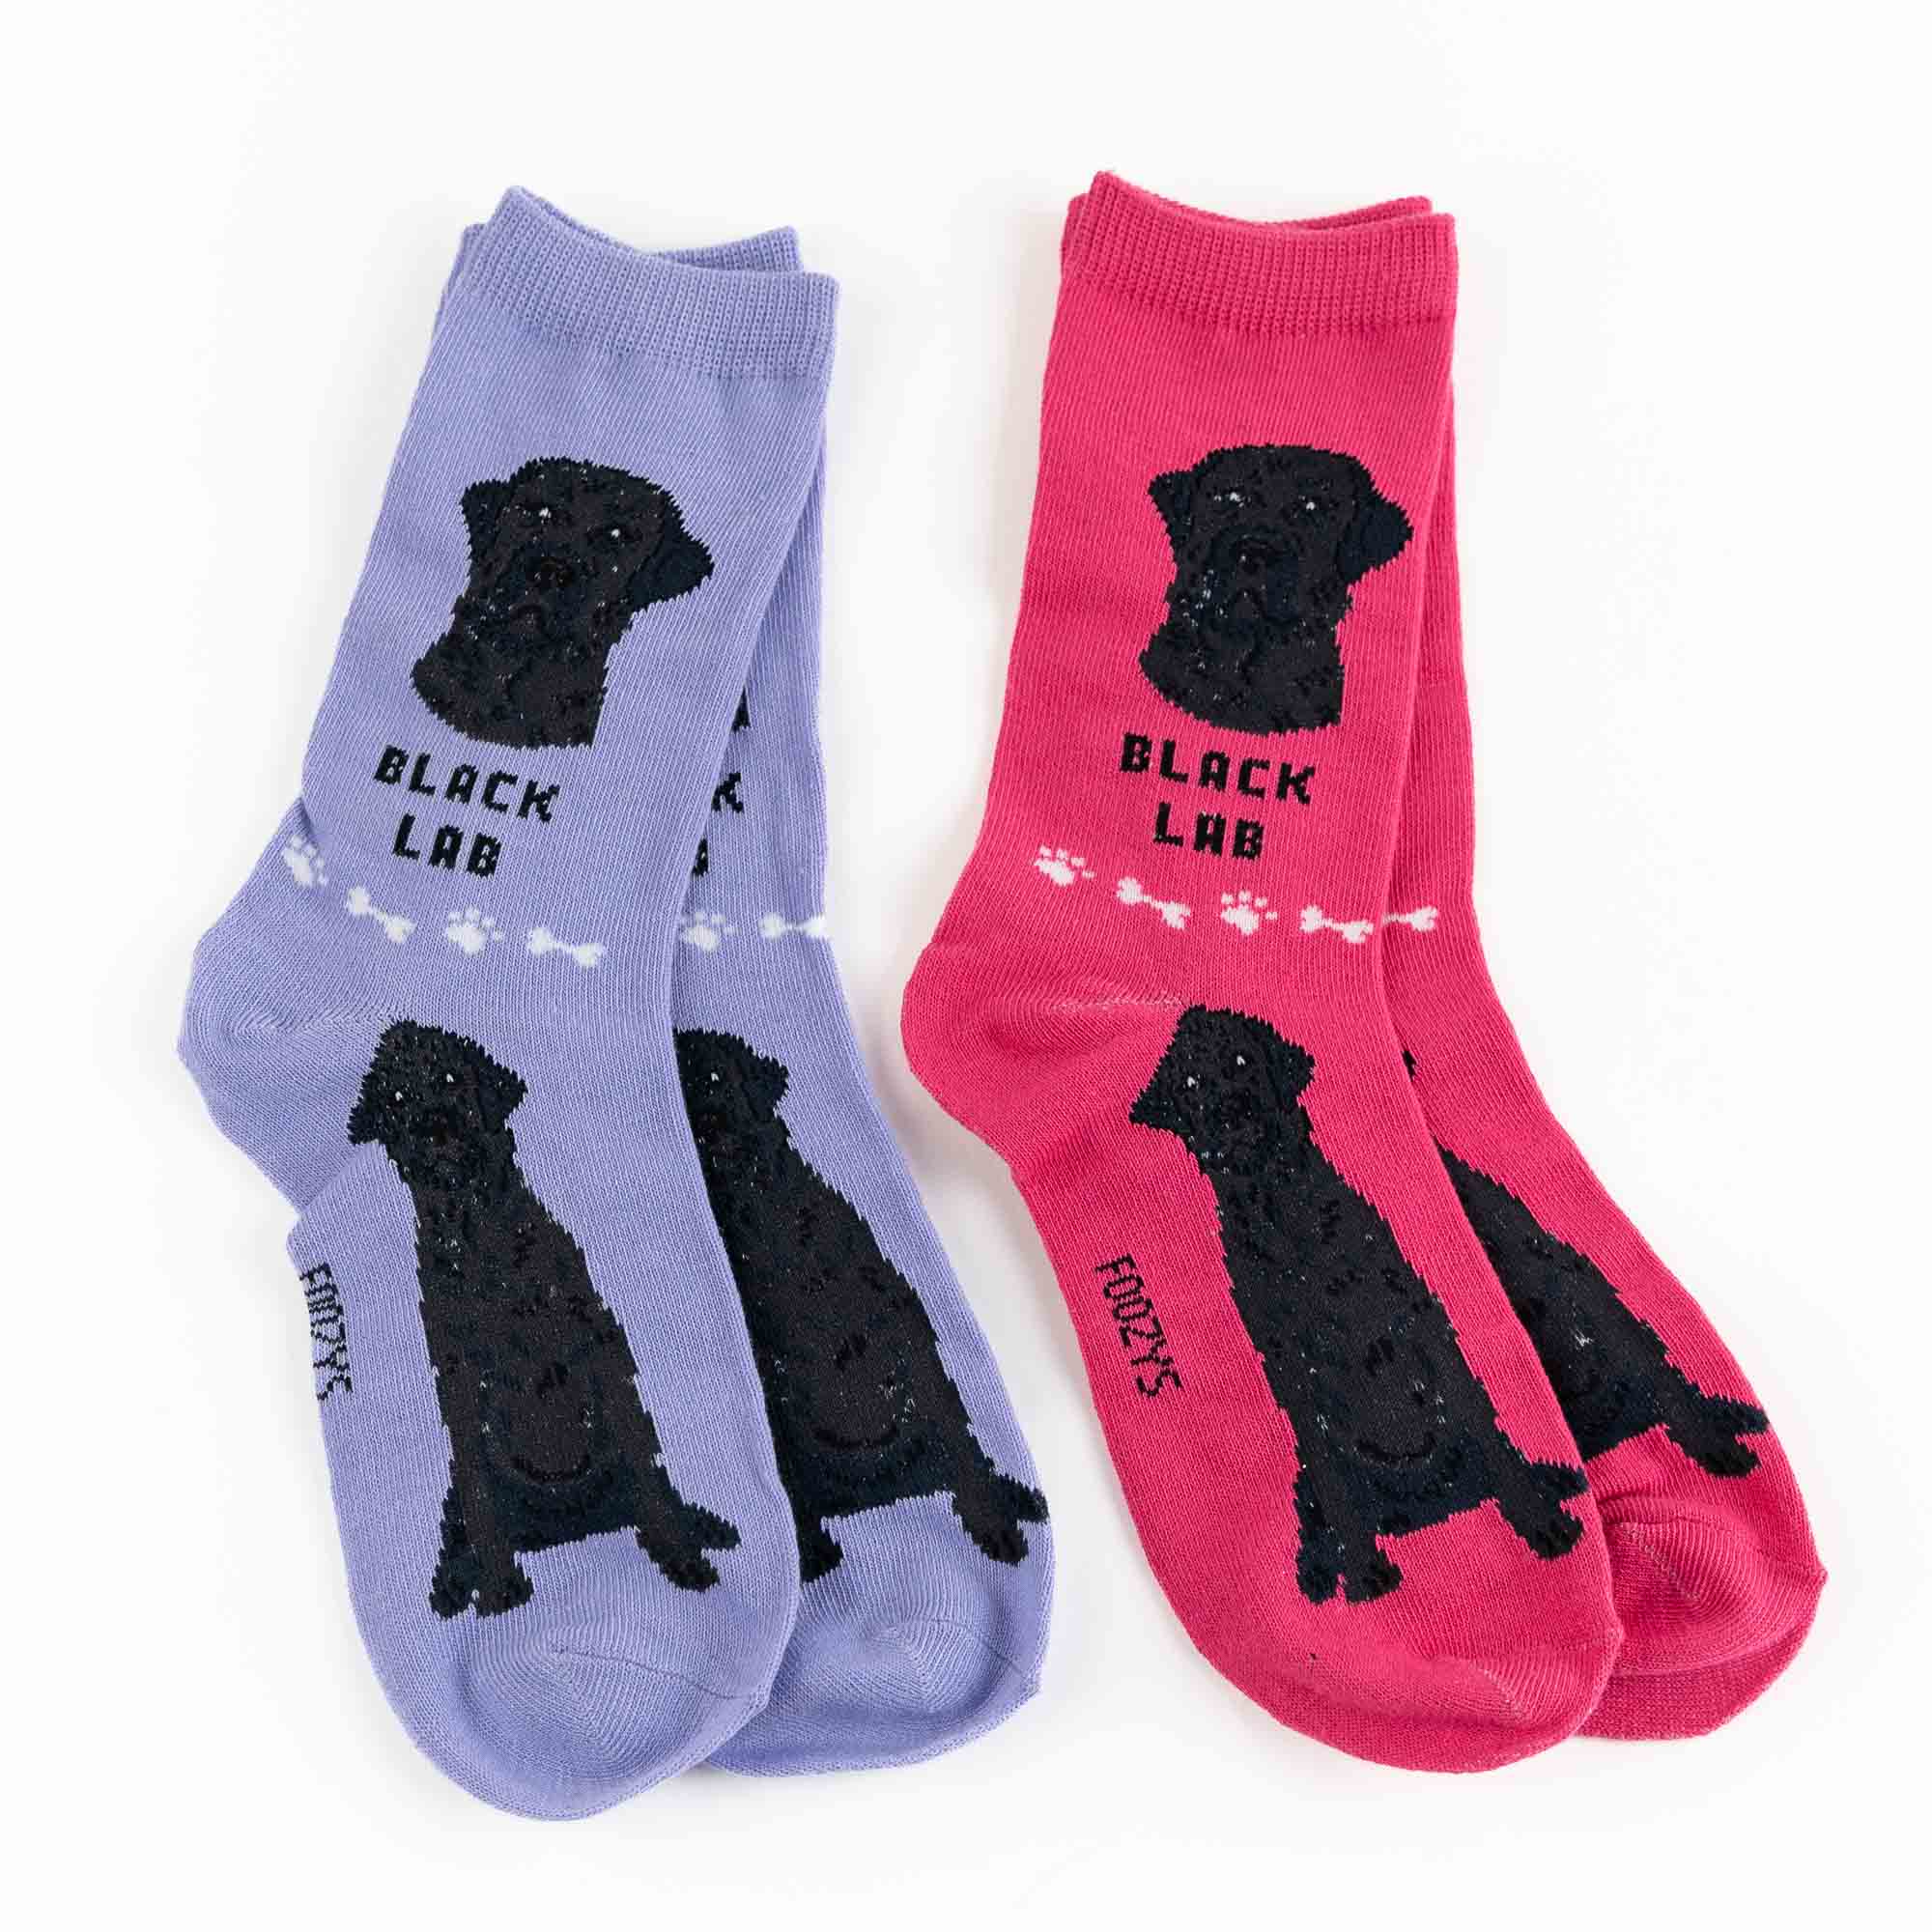 My Favorite Dog Breed Socks ❤️ Black Lab Breed Dog Sock - 2 Set Collection